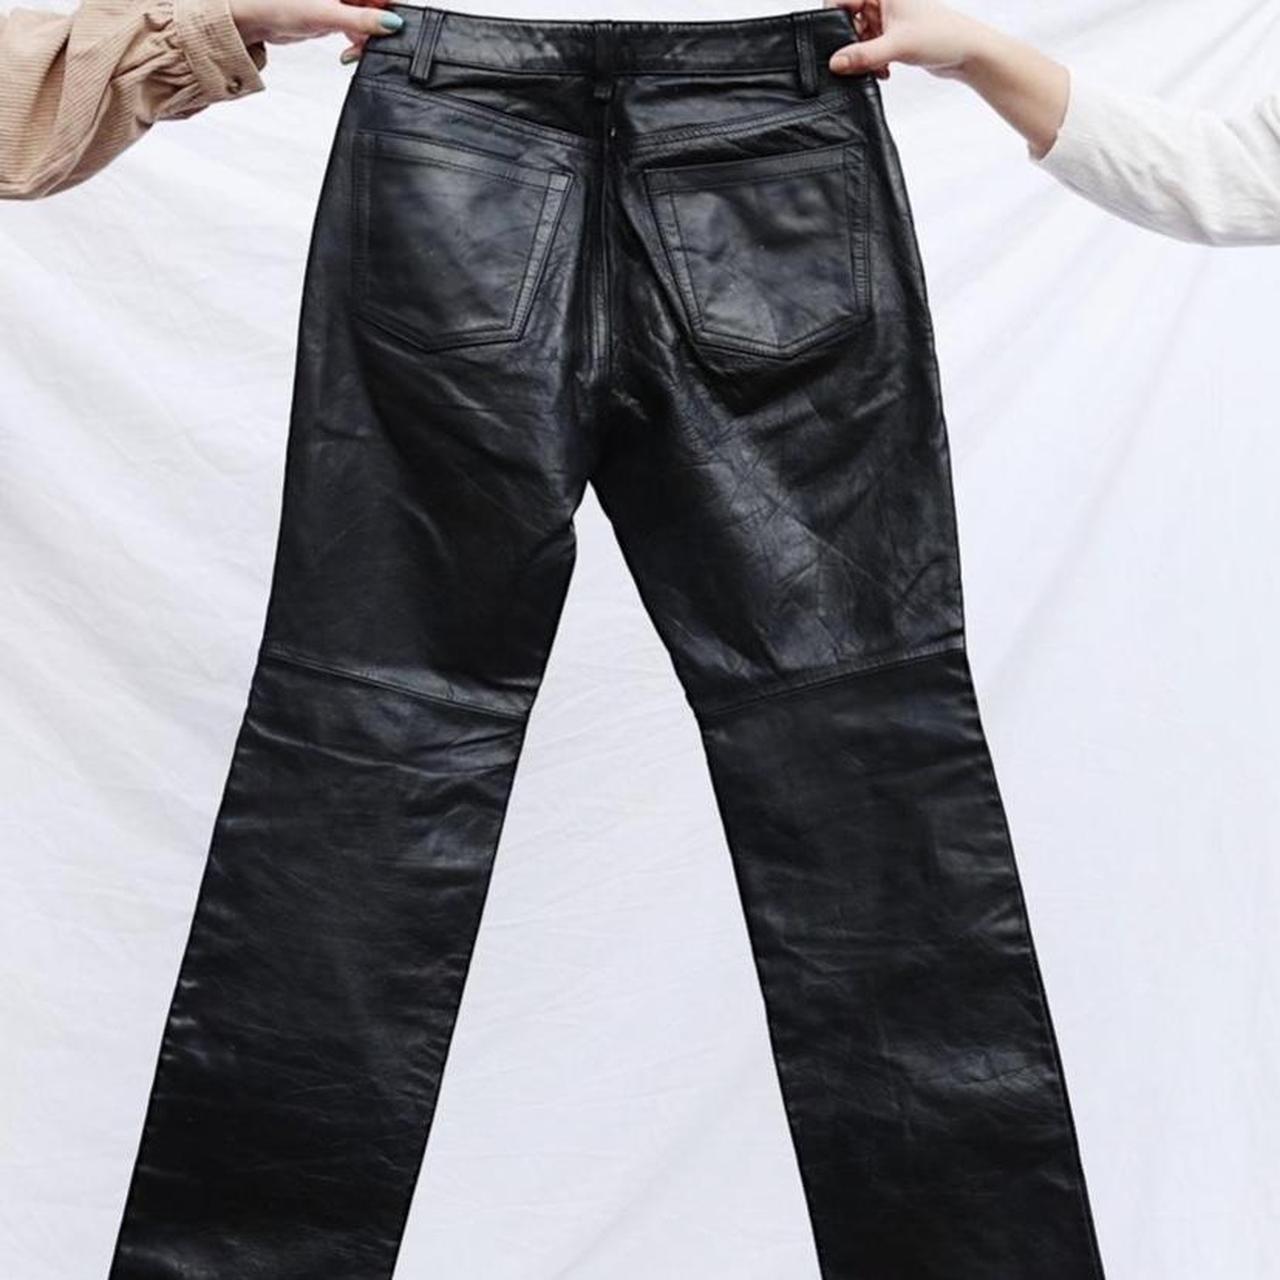 Black Gap leather pants Straight leg Size... - Depop